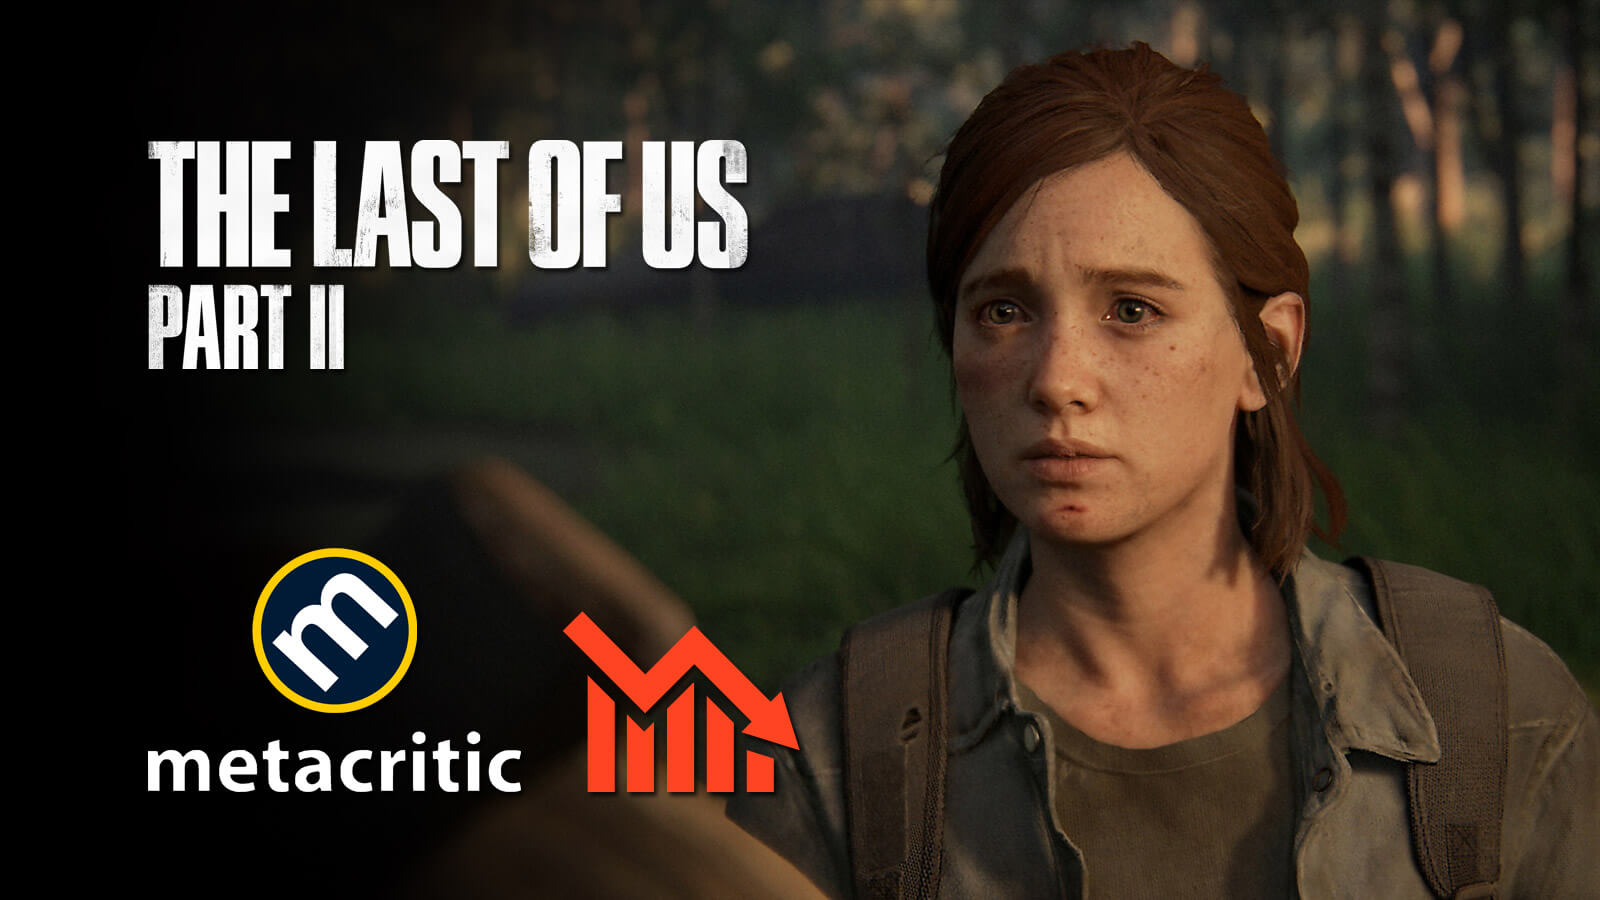 Last of Us 2 Metacritic Users' Best Game of 2020 by a Landslide